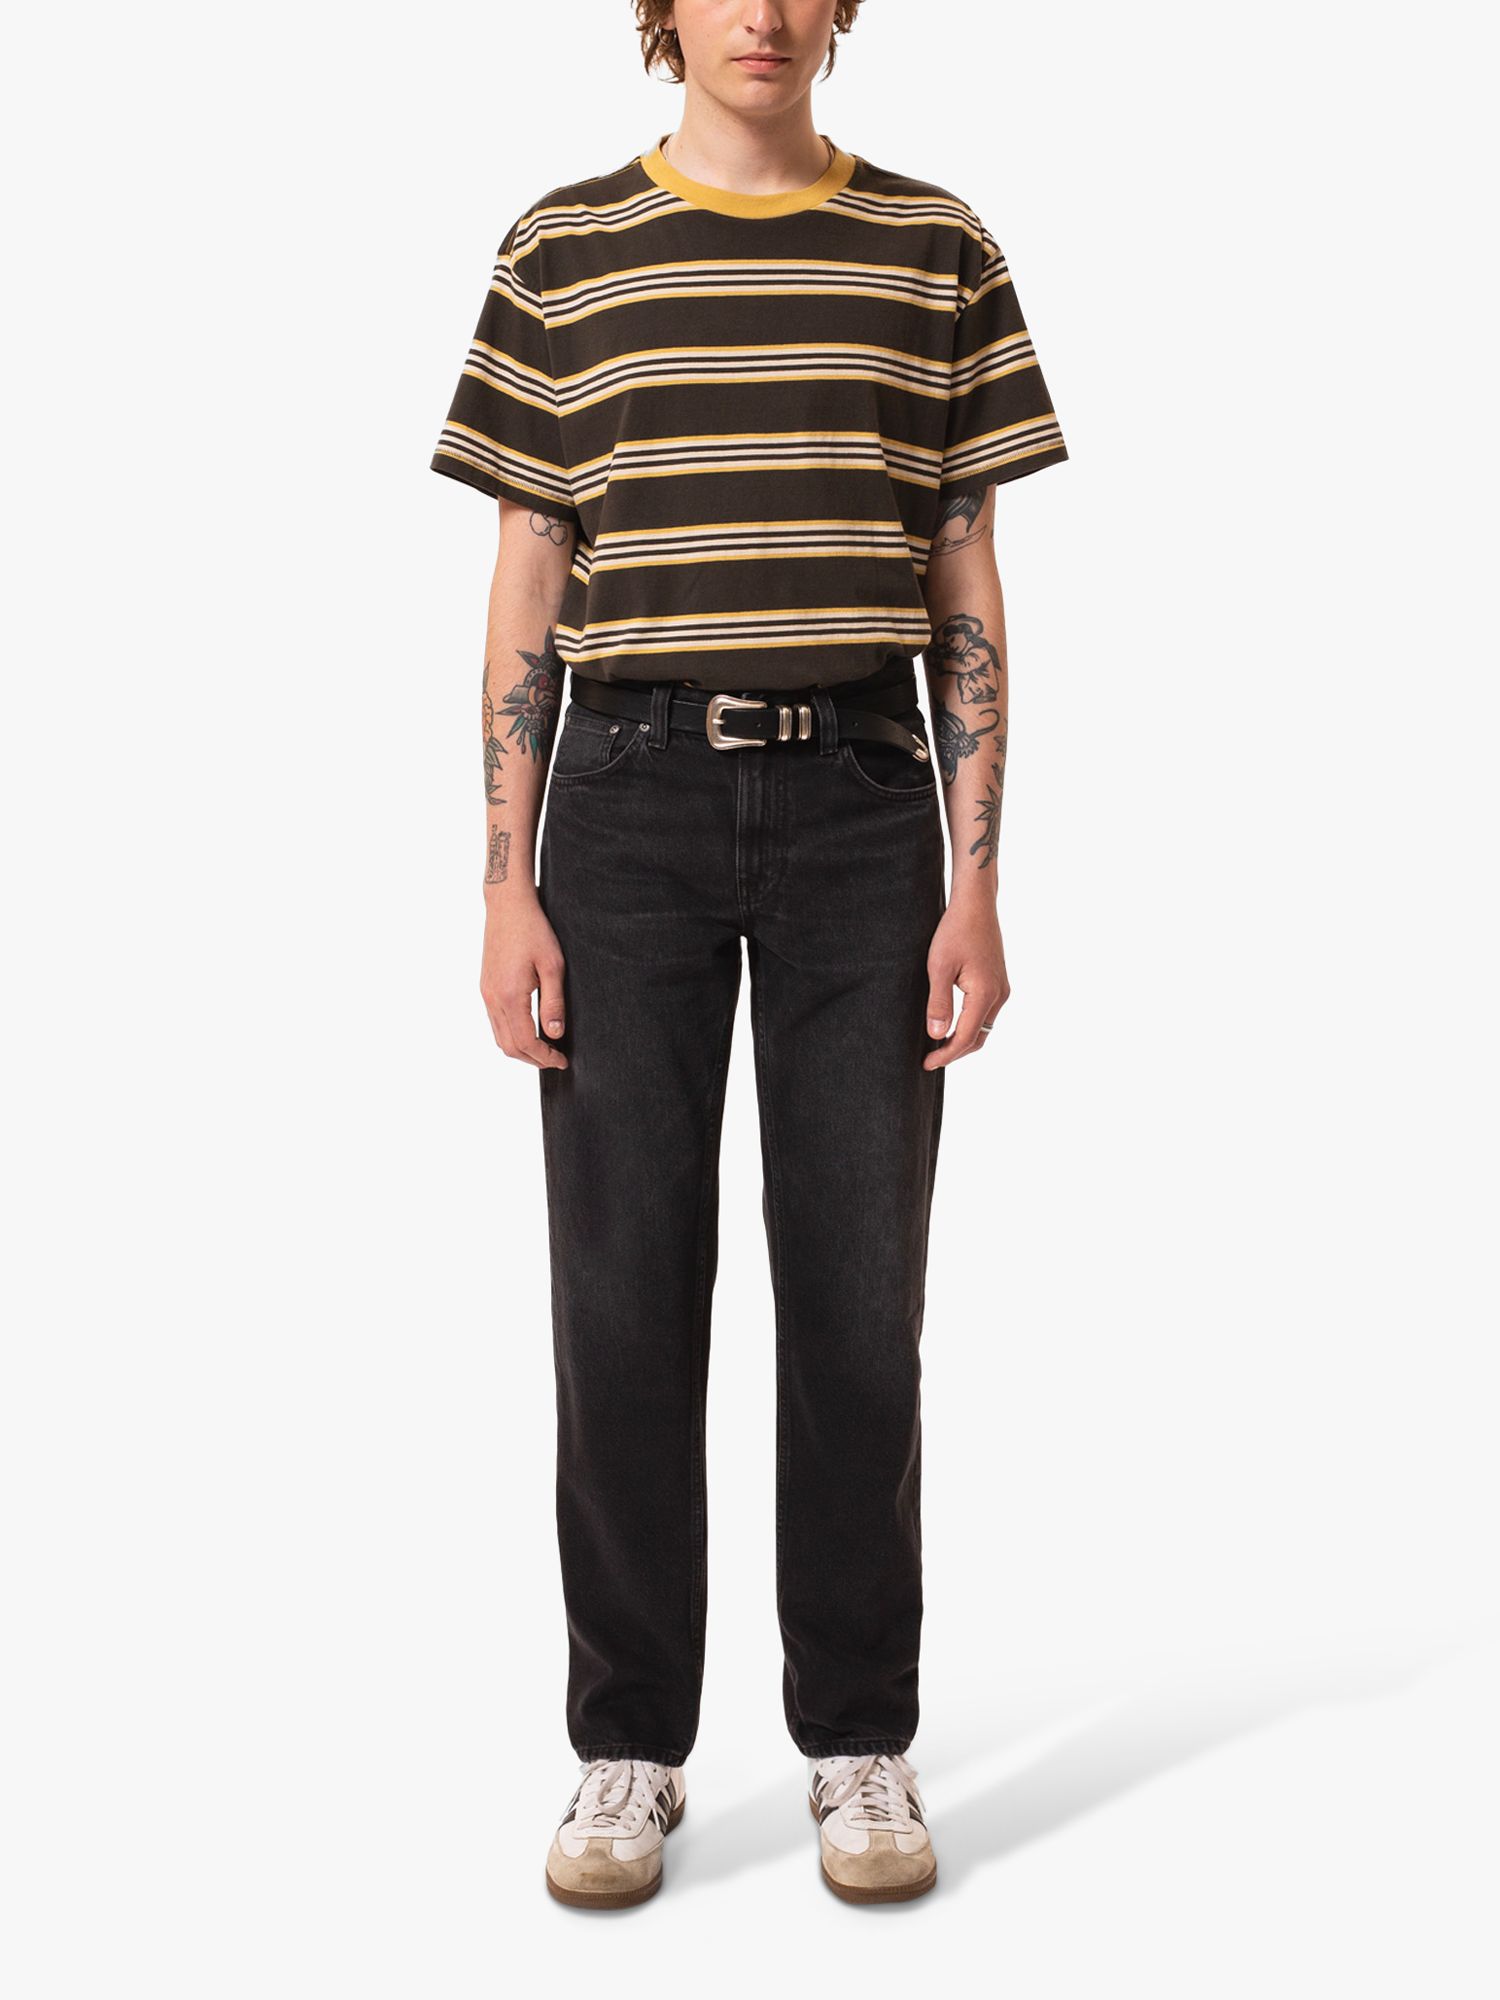 Nudie Jeans Leif Stripe T-Shirt, Multi, XL